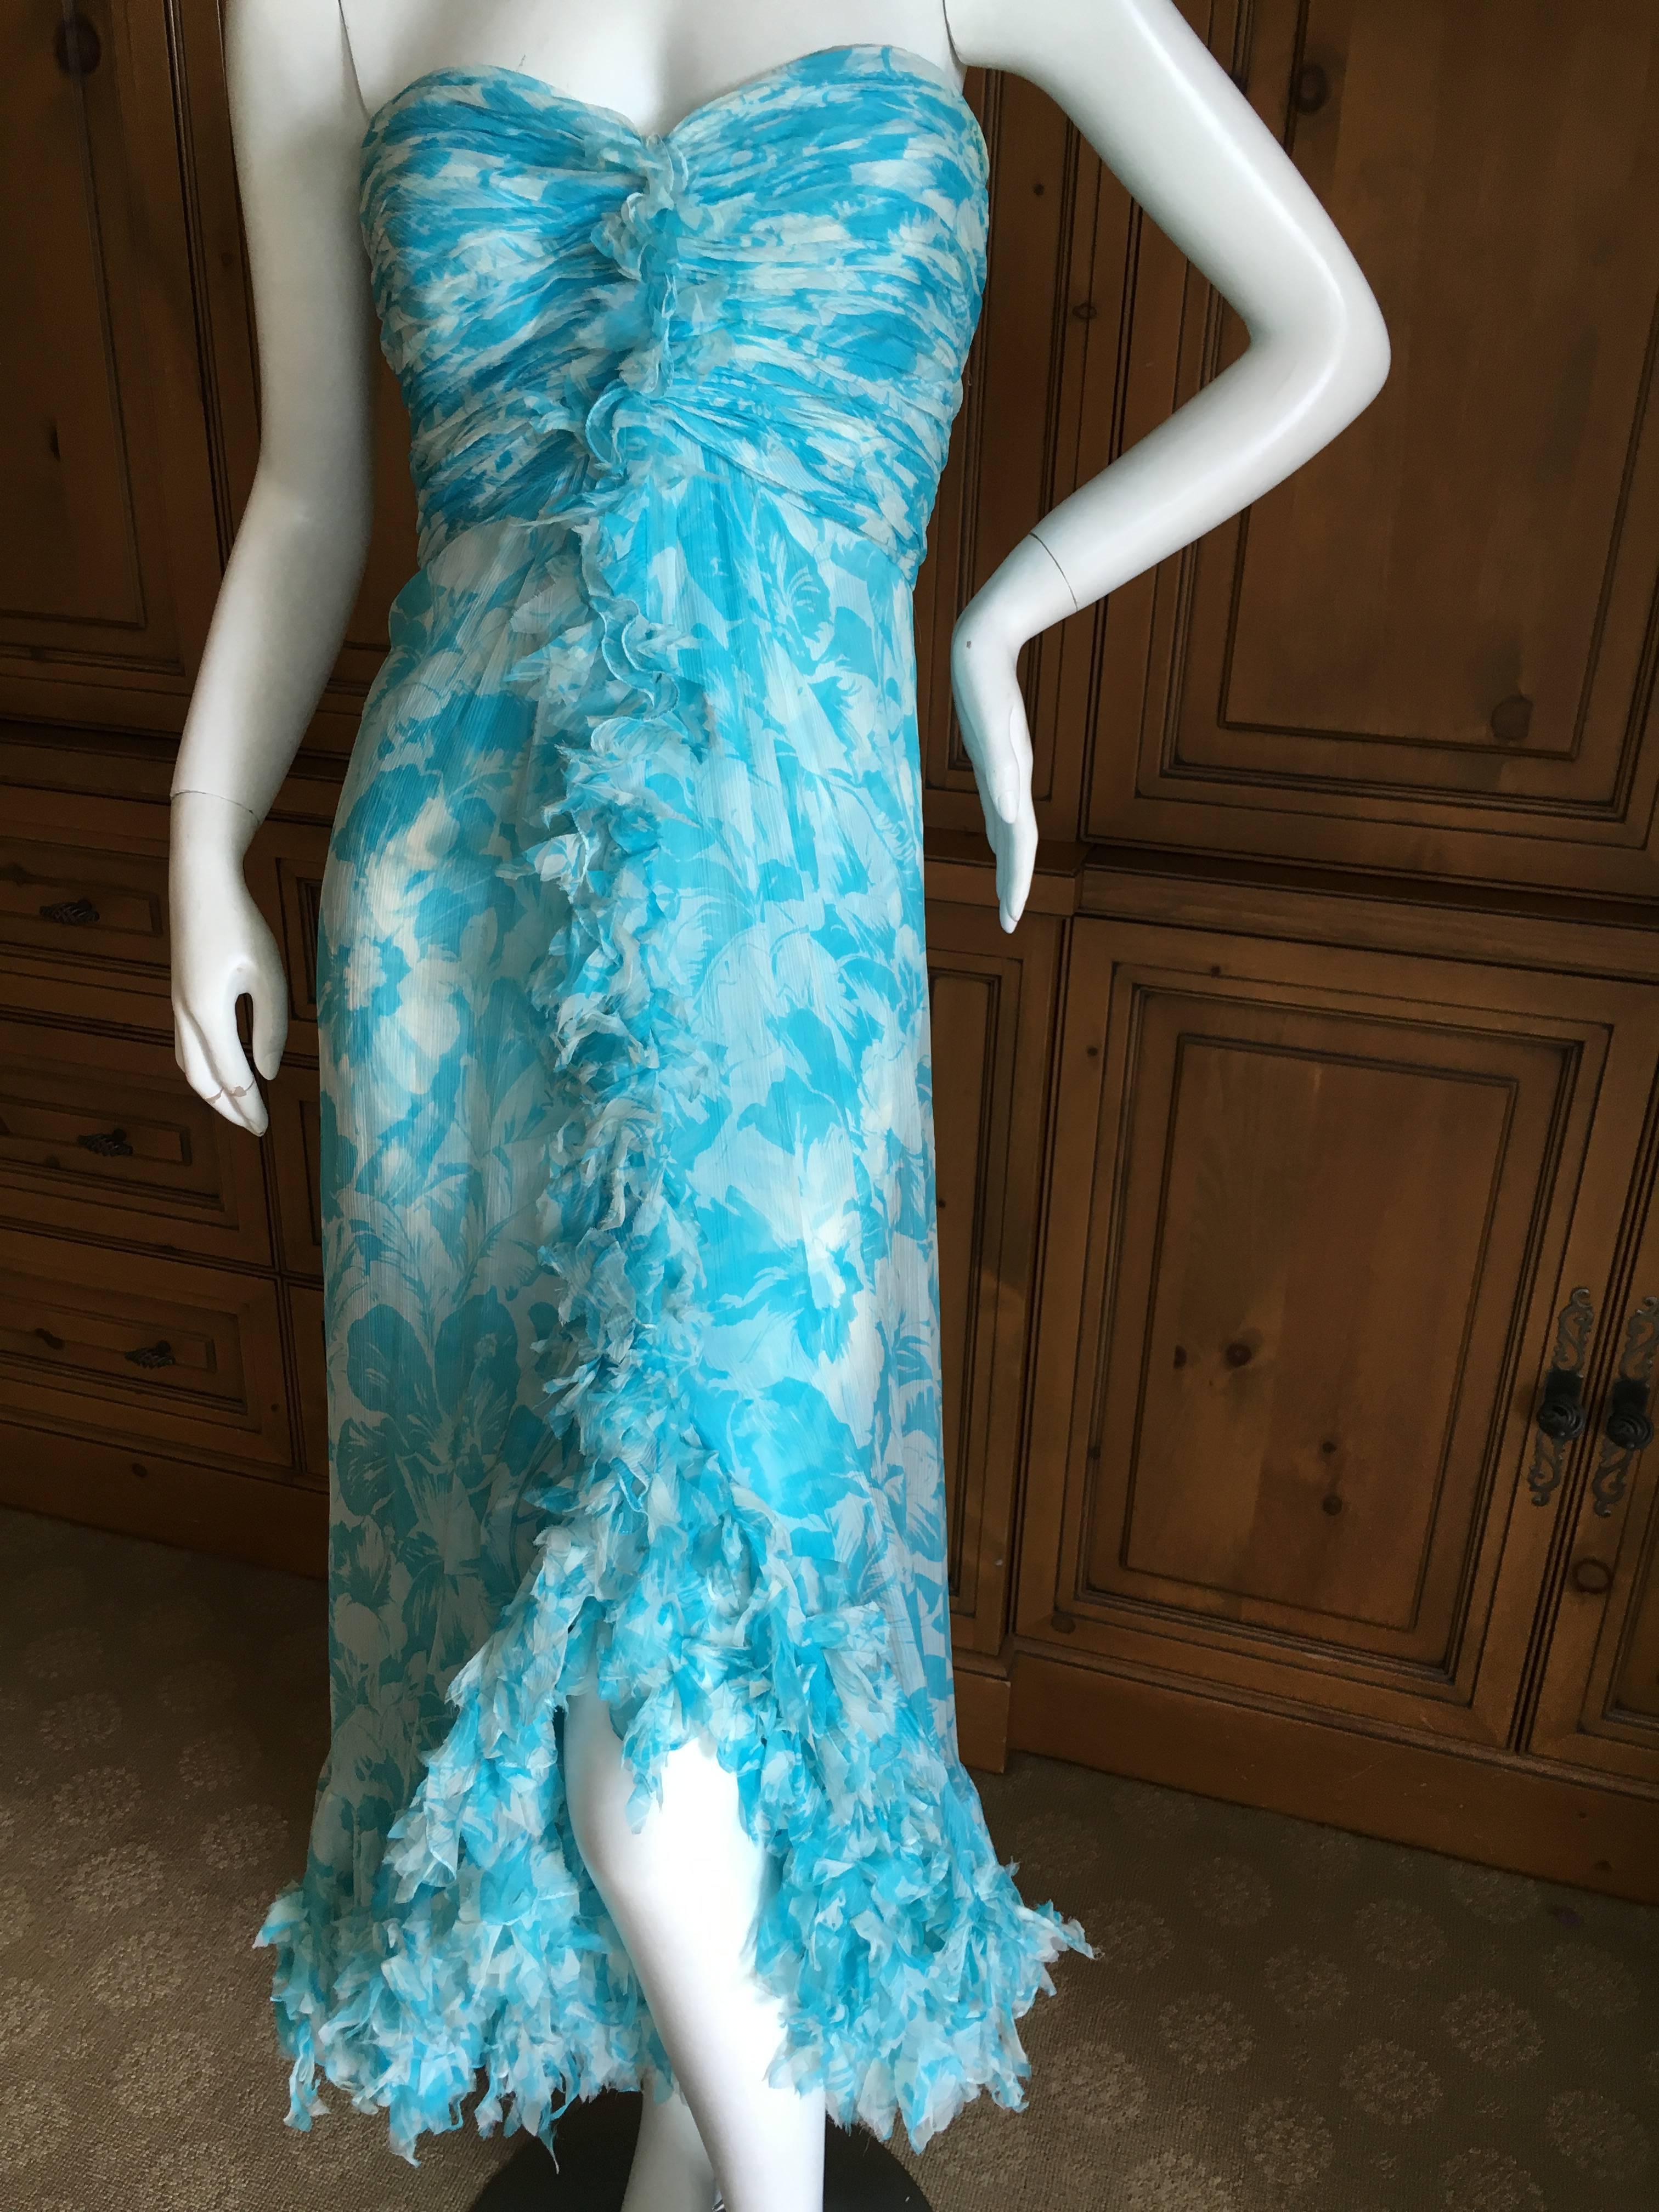 Oscar de la Renta Ruffled Silk Strapless Vintage Cocktail Dress.
Size 6
Bust 36